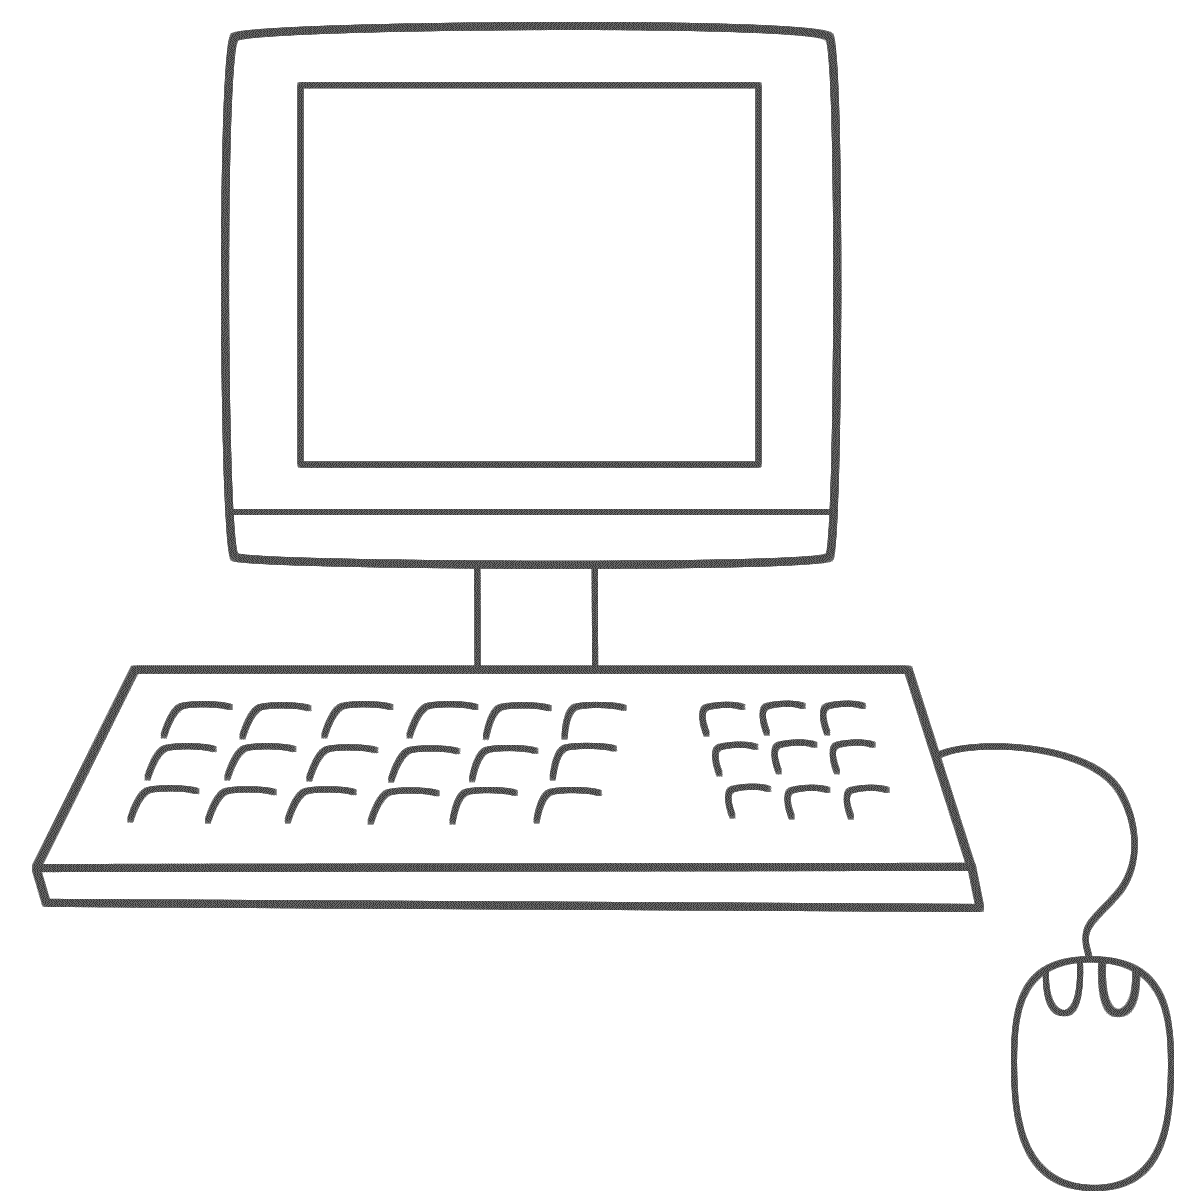 teclado de computadora para colorear